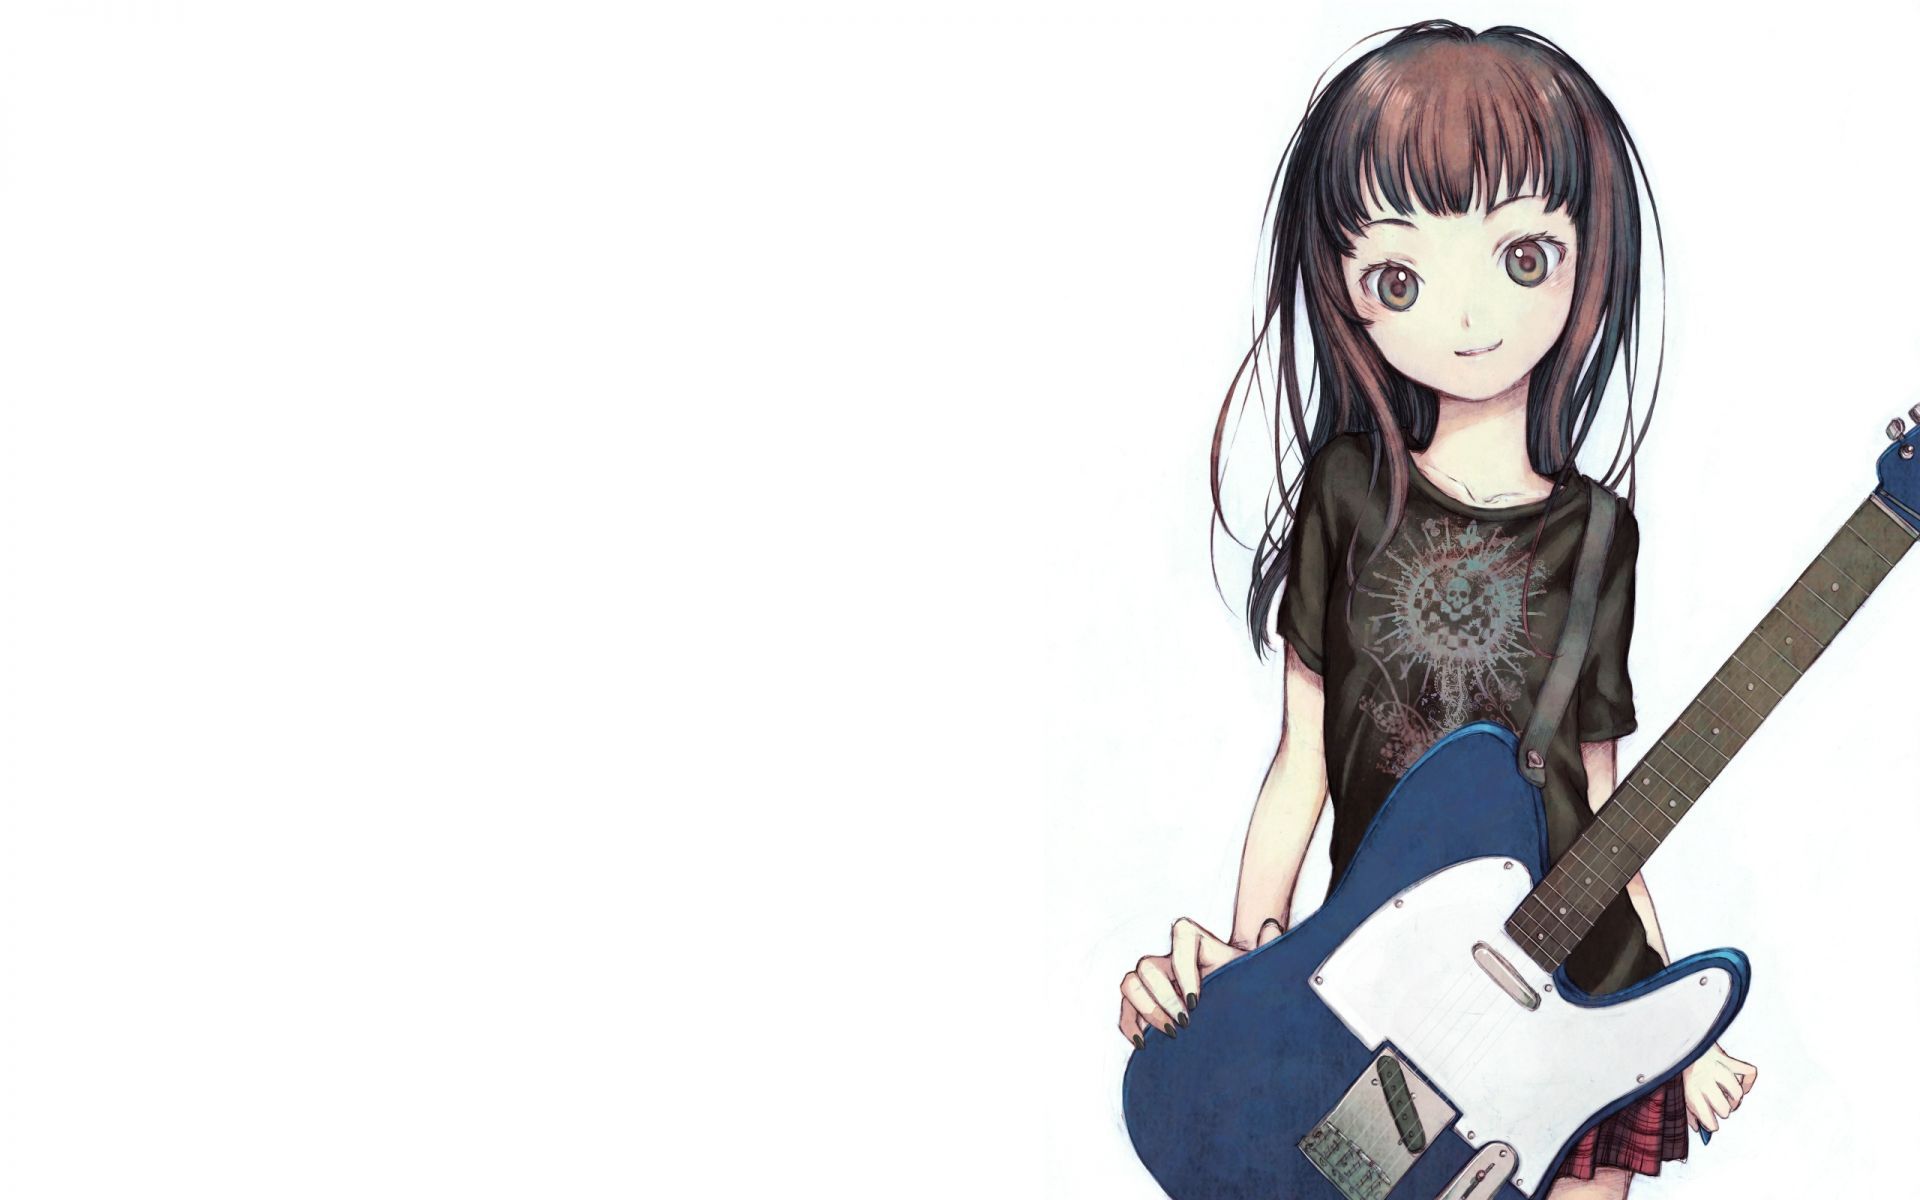 Cute Anime Girl Guitar Wallpapers